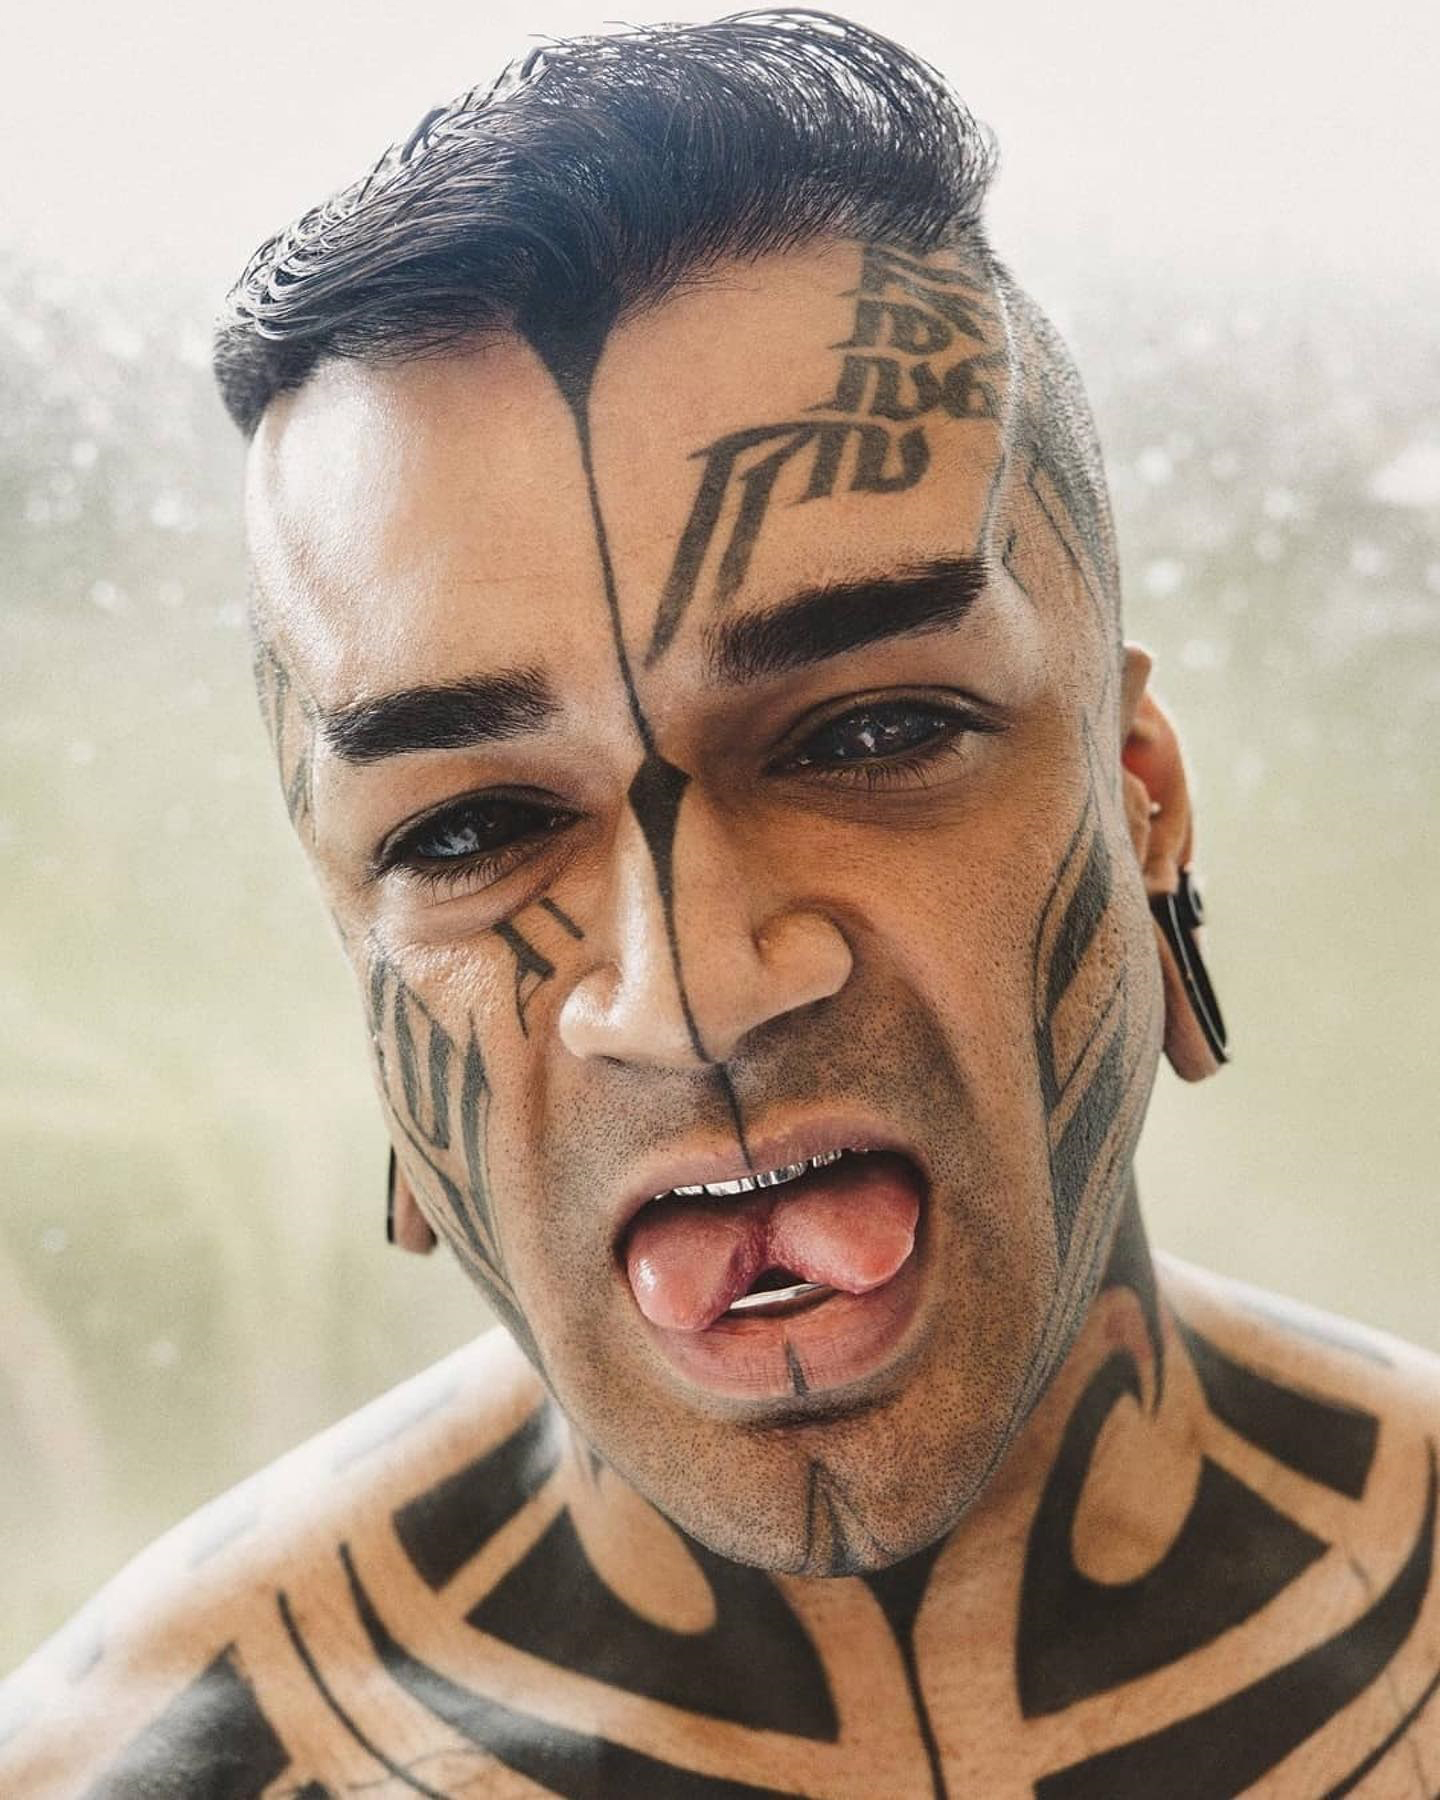 Karan reveals his split tongue and body tattoos